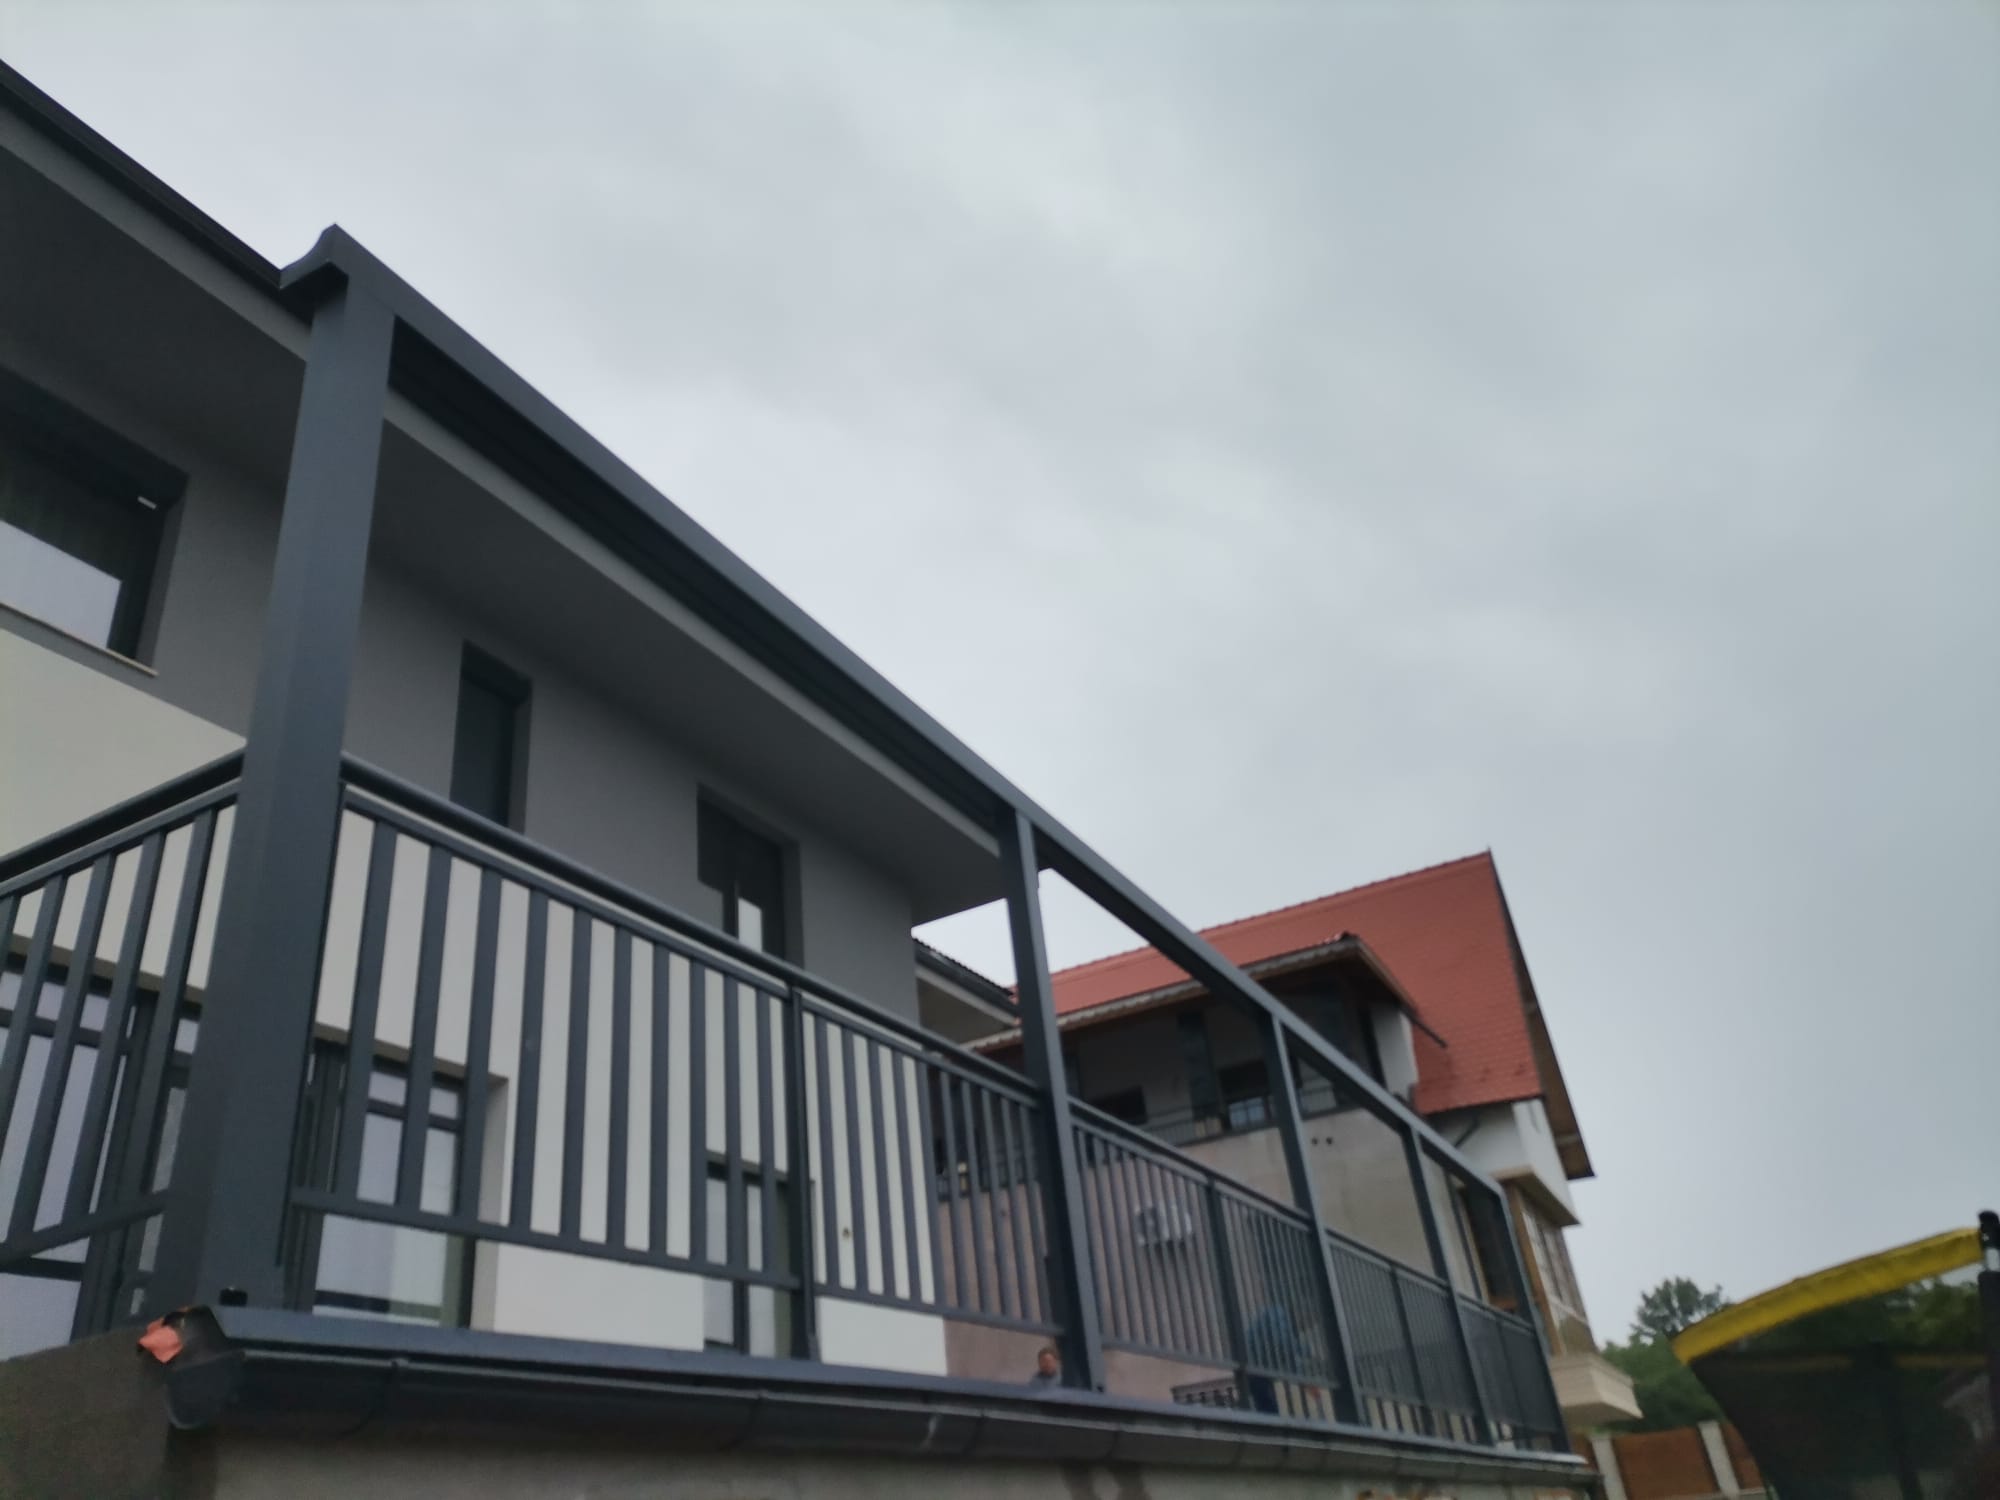 ALUMGATES Detalii - balustrade din aluminiu - Balustrade din aluminiu pentru trepte, scari, terase, balcon ALUMGATES